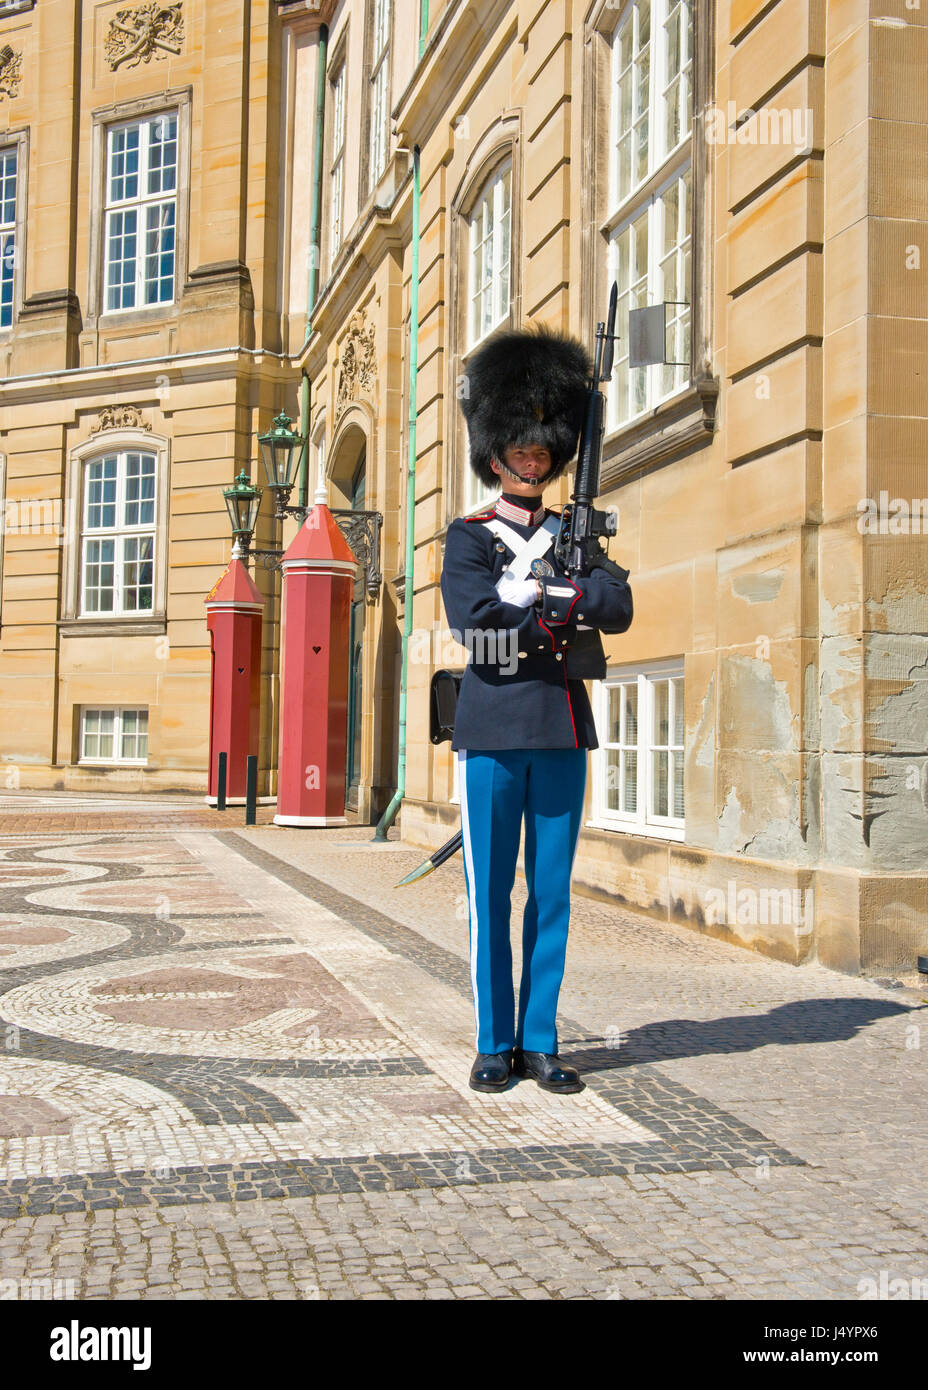 Royal Guard and sentry box at the Royal Palace of Amalienborg, Copenhagen,Denmark Stock Photo